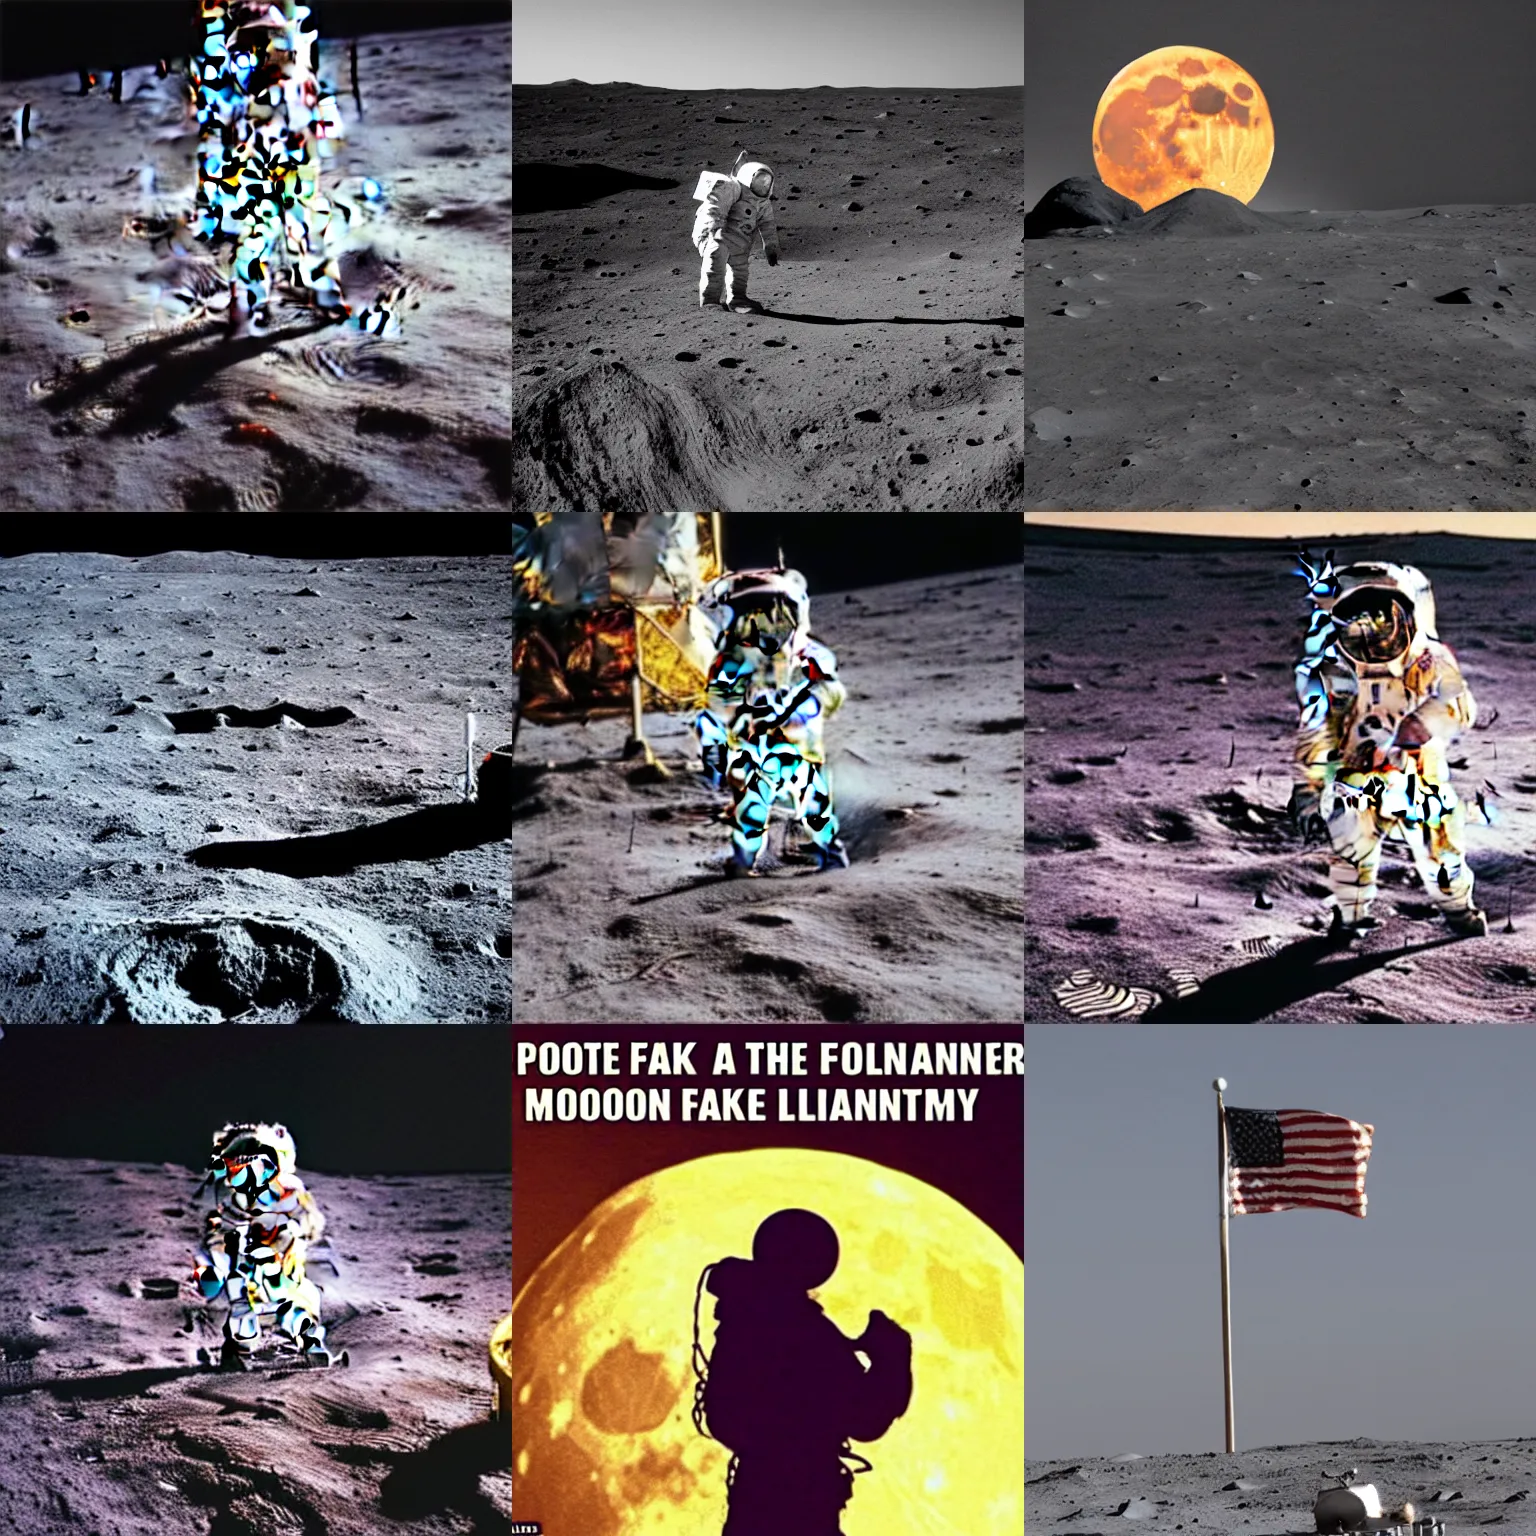 lunar landing memes